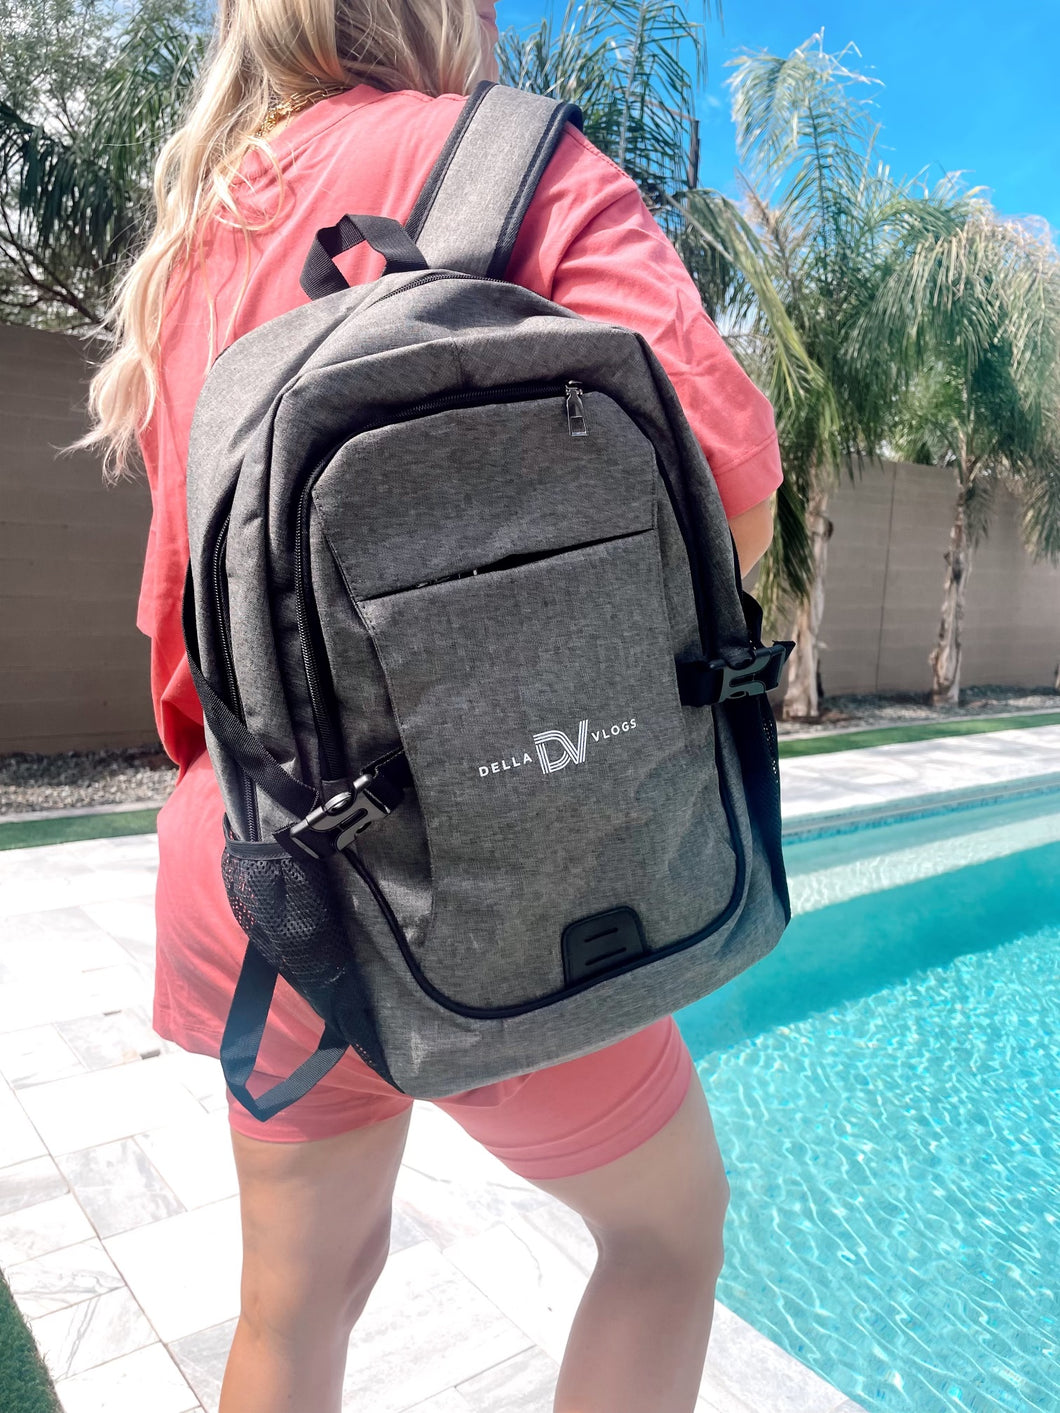 DellaVlogs Backpack